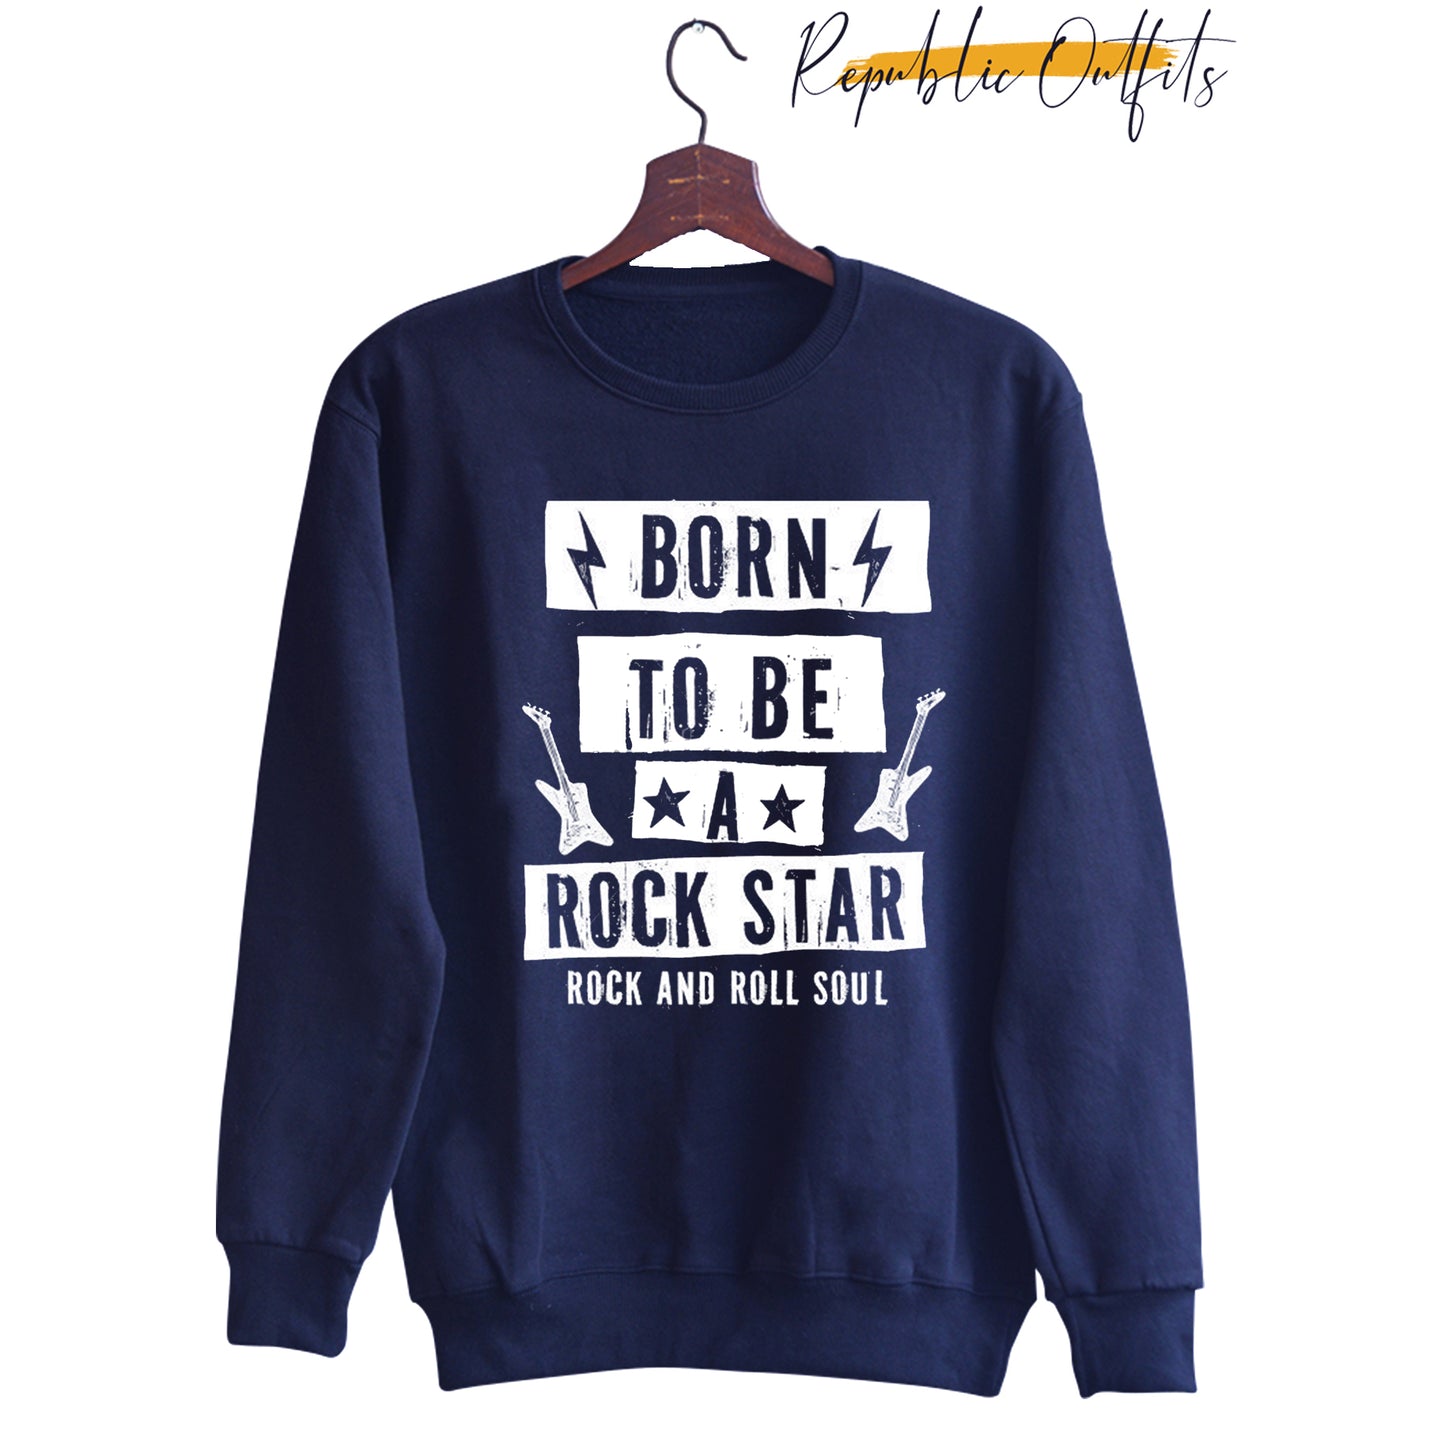 Born a Rockstar Sweatshirt